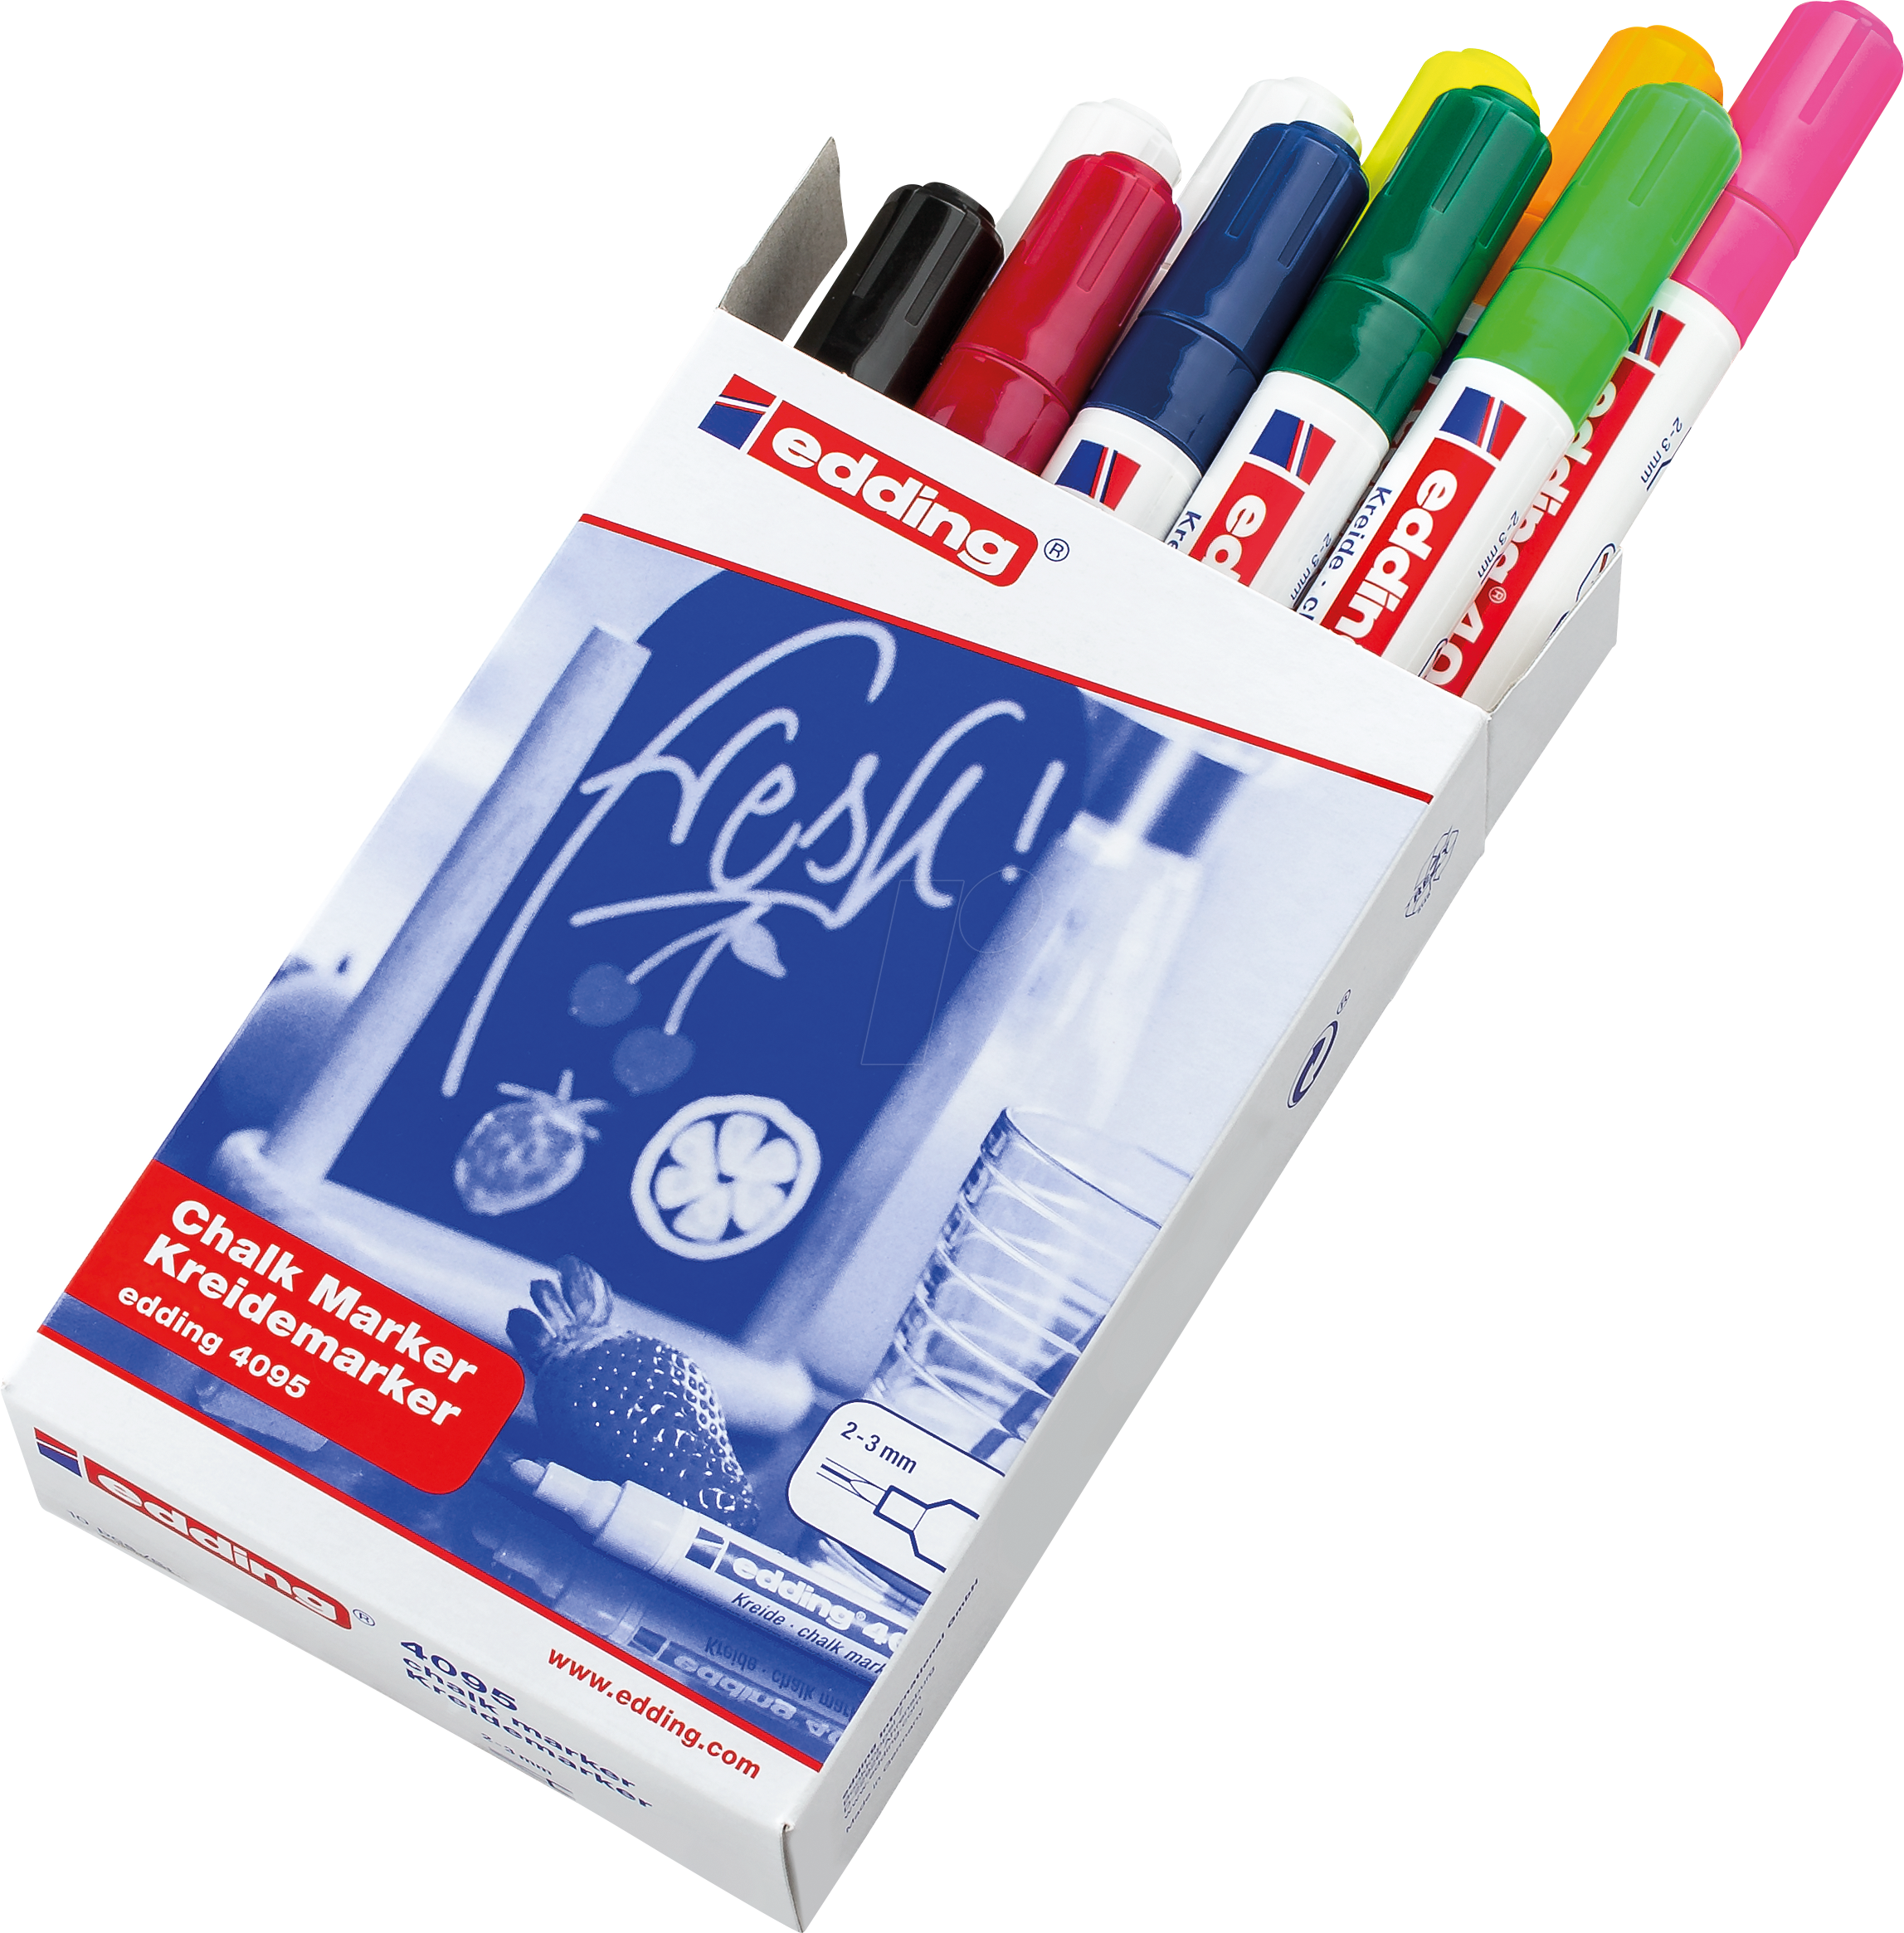 Edding 4095 Chalk/window Marker 2 3 mm,2x Black and 1 Blue new loose pens 